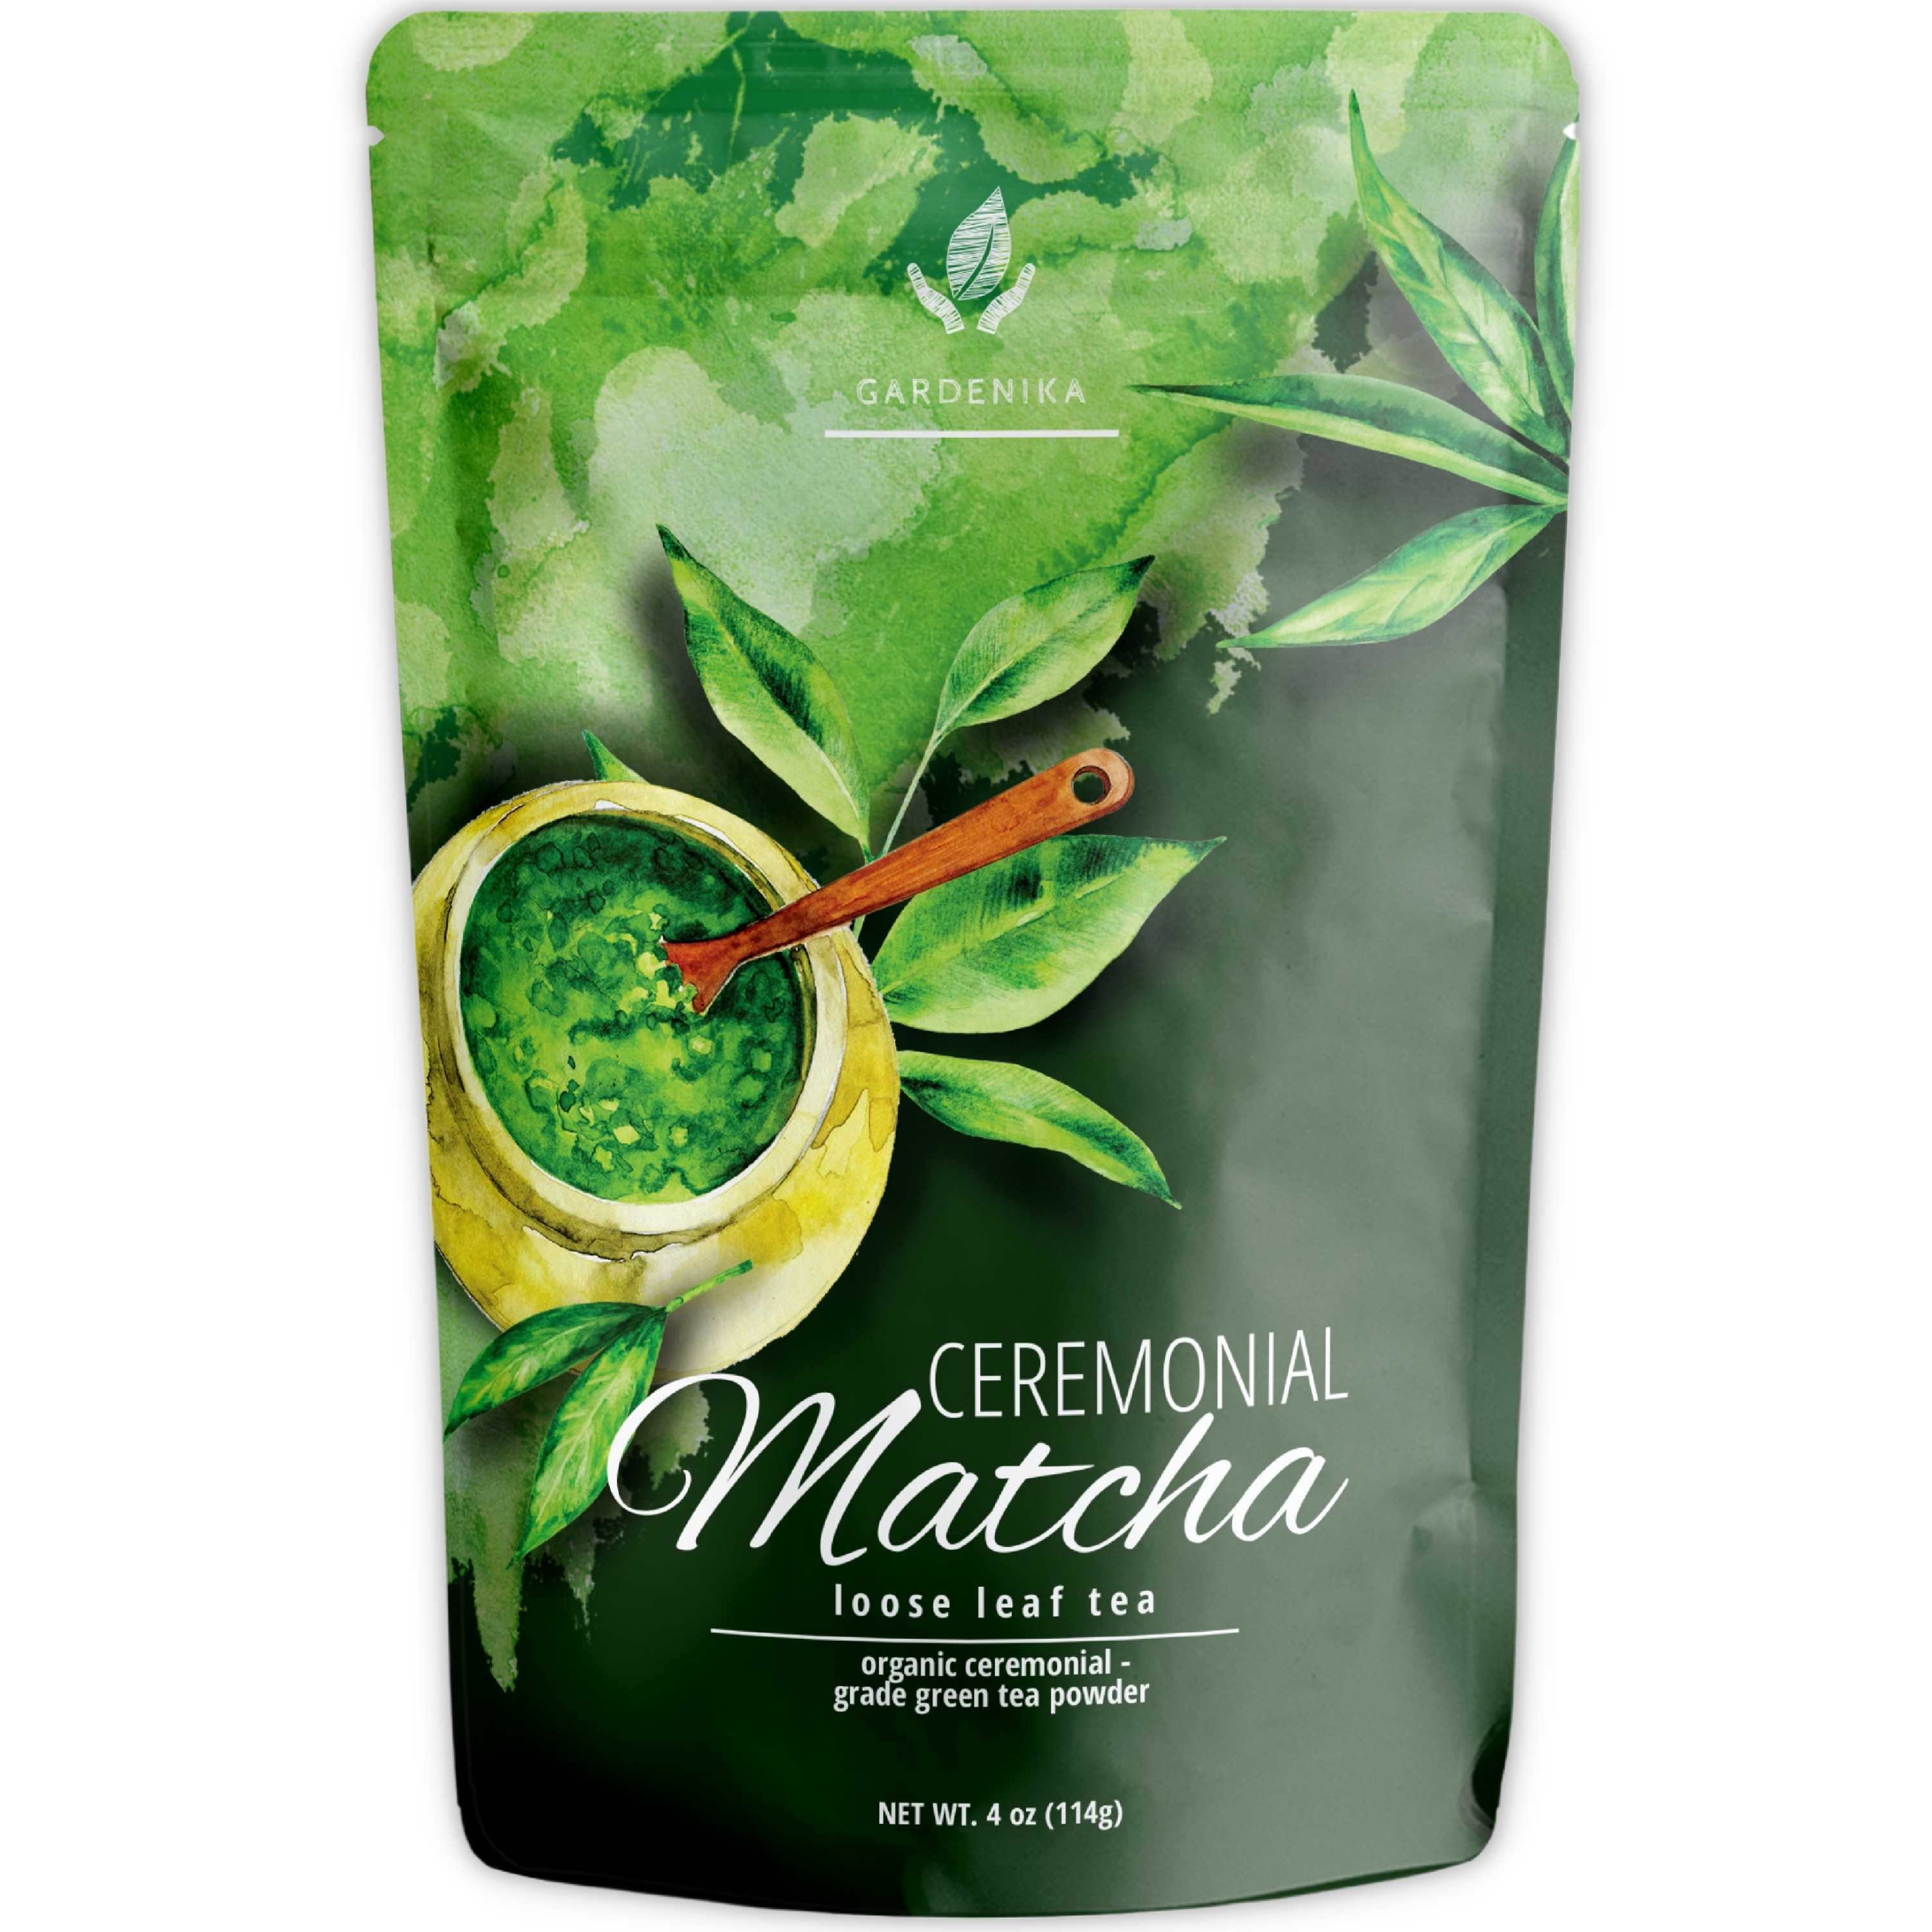 Customizable Matcha Set with Ceremonial Matcha – Nio Teas